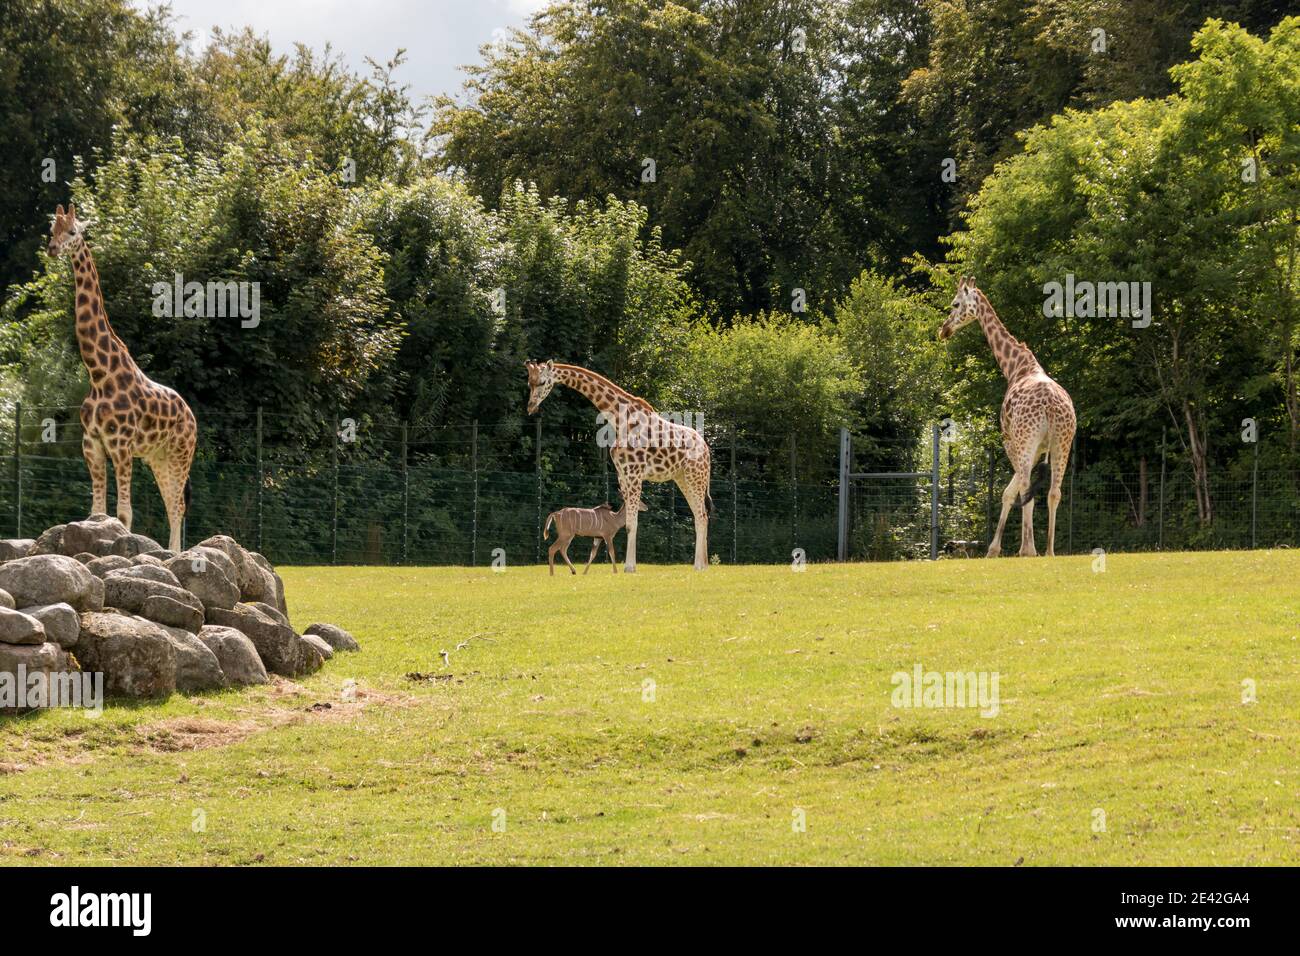 Aalborg, Denmark - 25 Jul 2020: Giraffes on a grass field Stock Photo